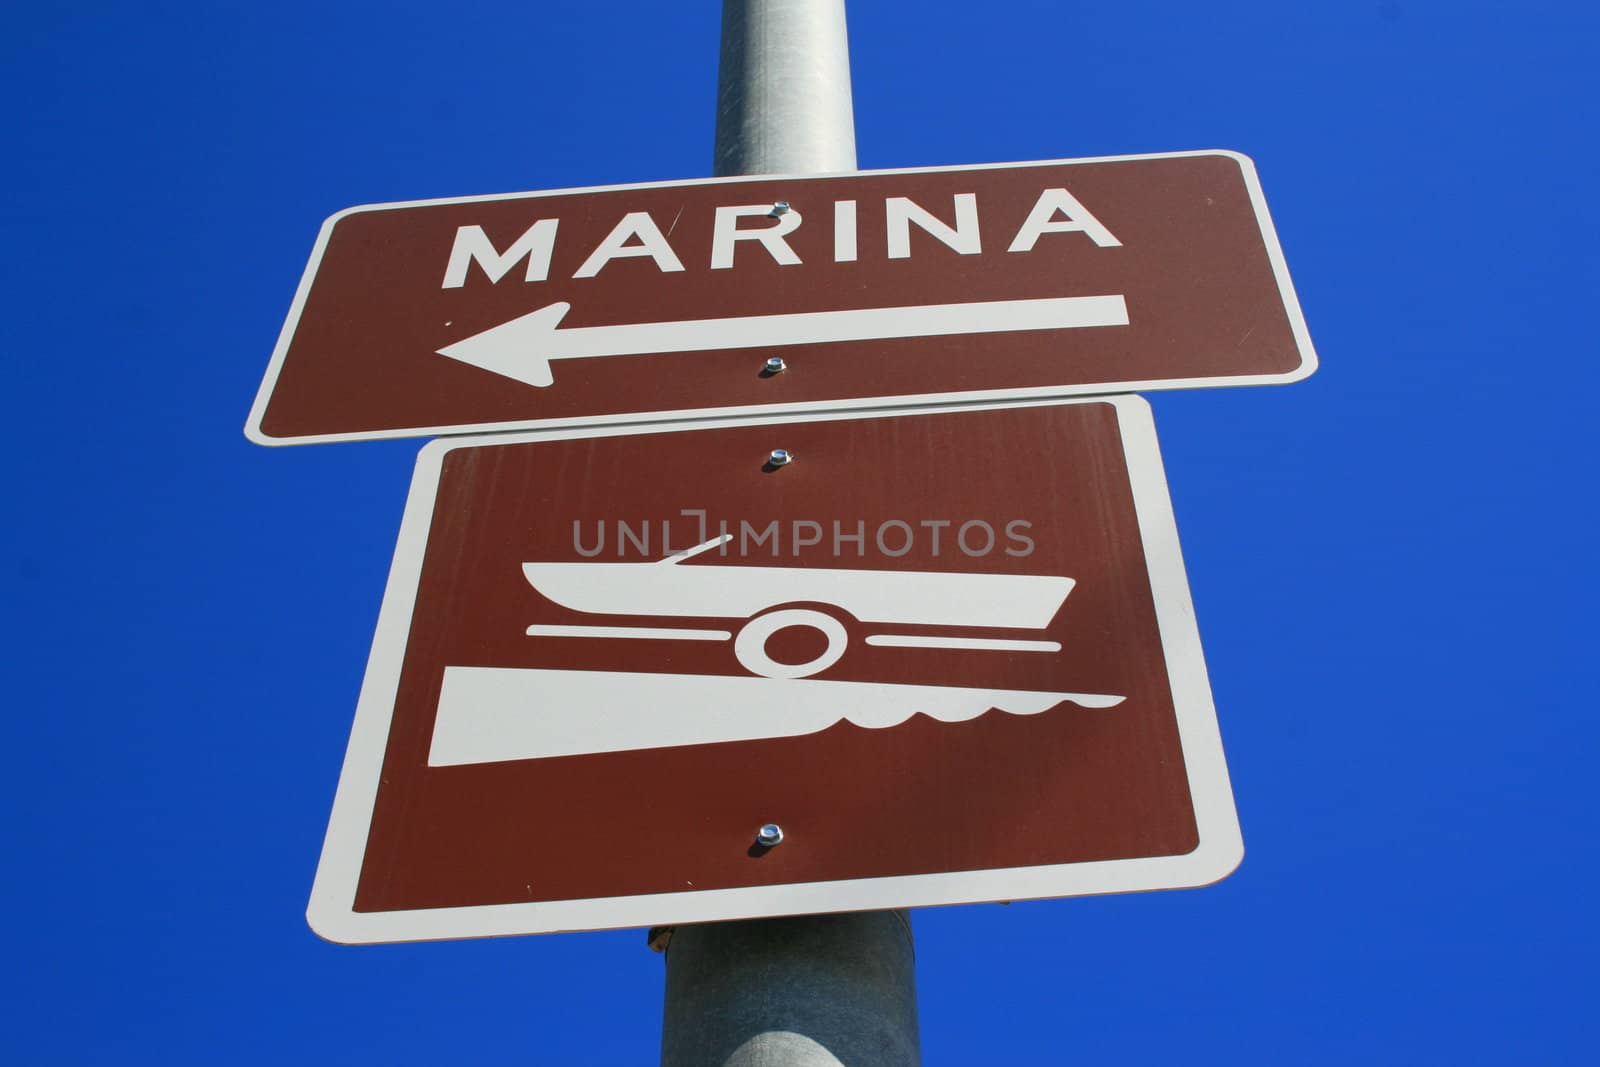 Marina direction street sign over blue sky.
